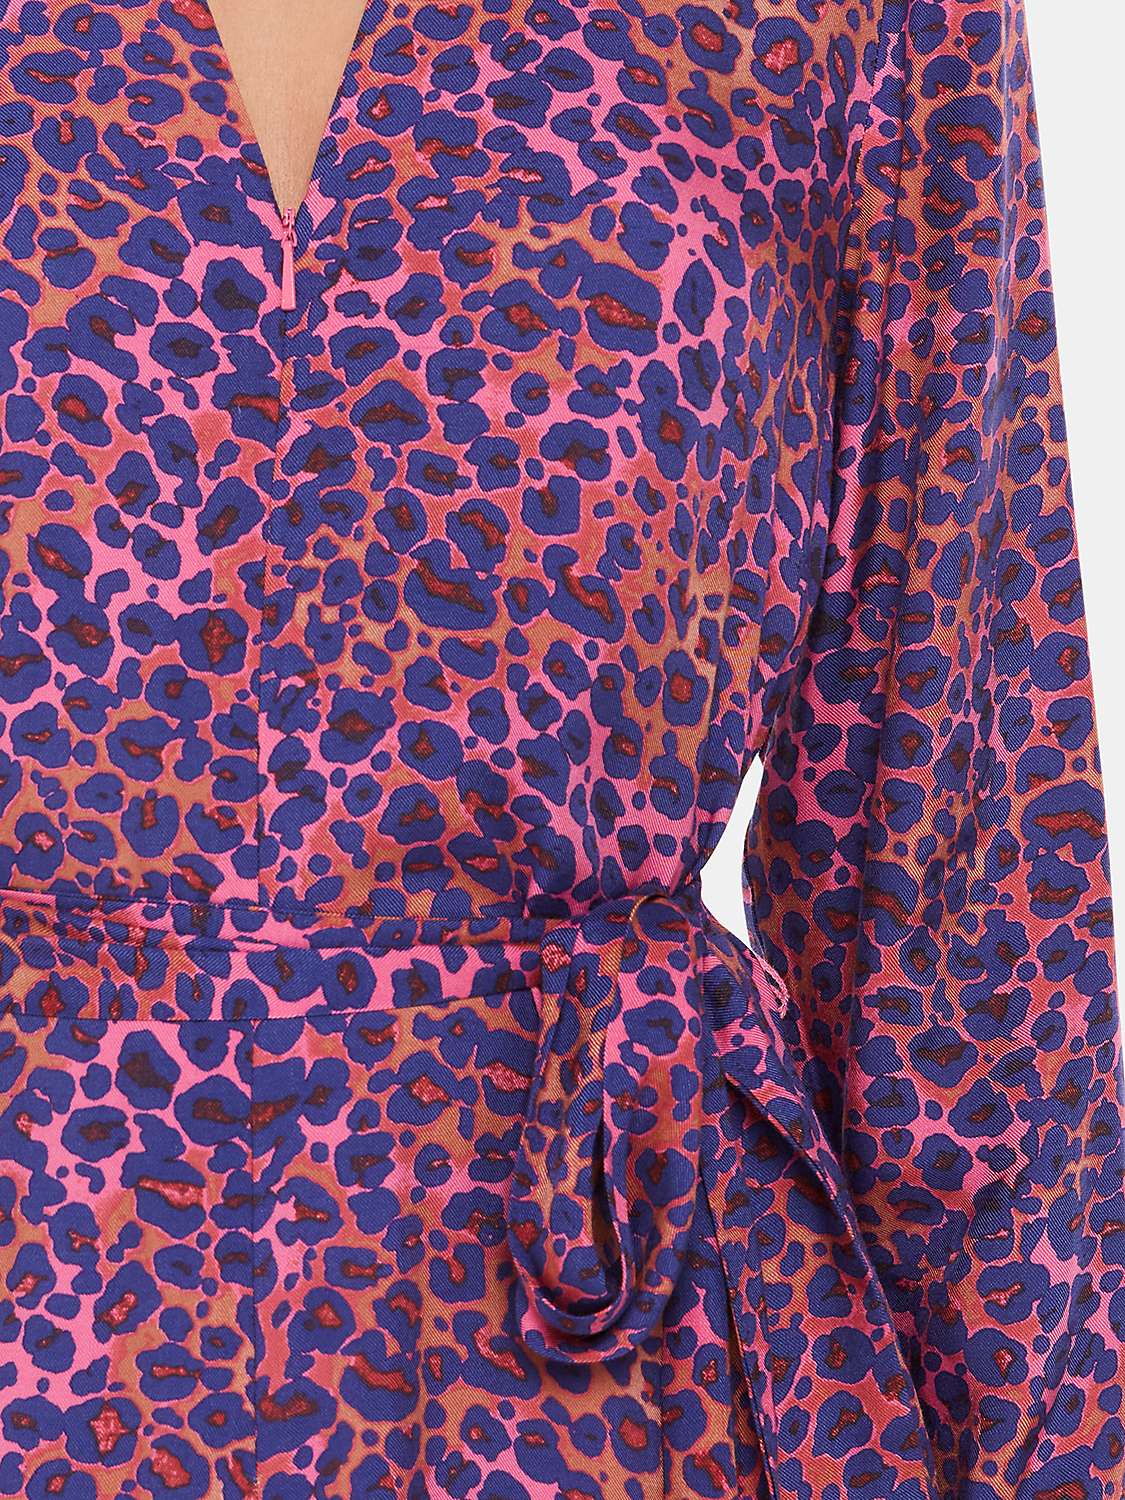 Buy Whistles Mottled Leopard Midi Dress, Pink/Multi Online at johnlewis.com